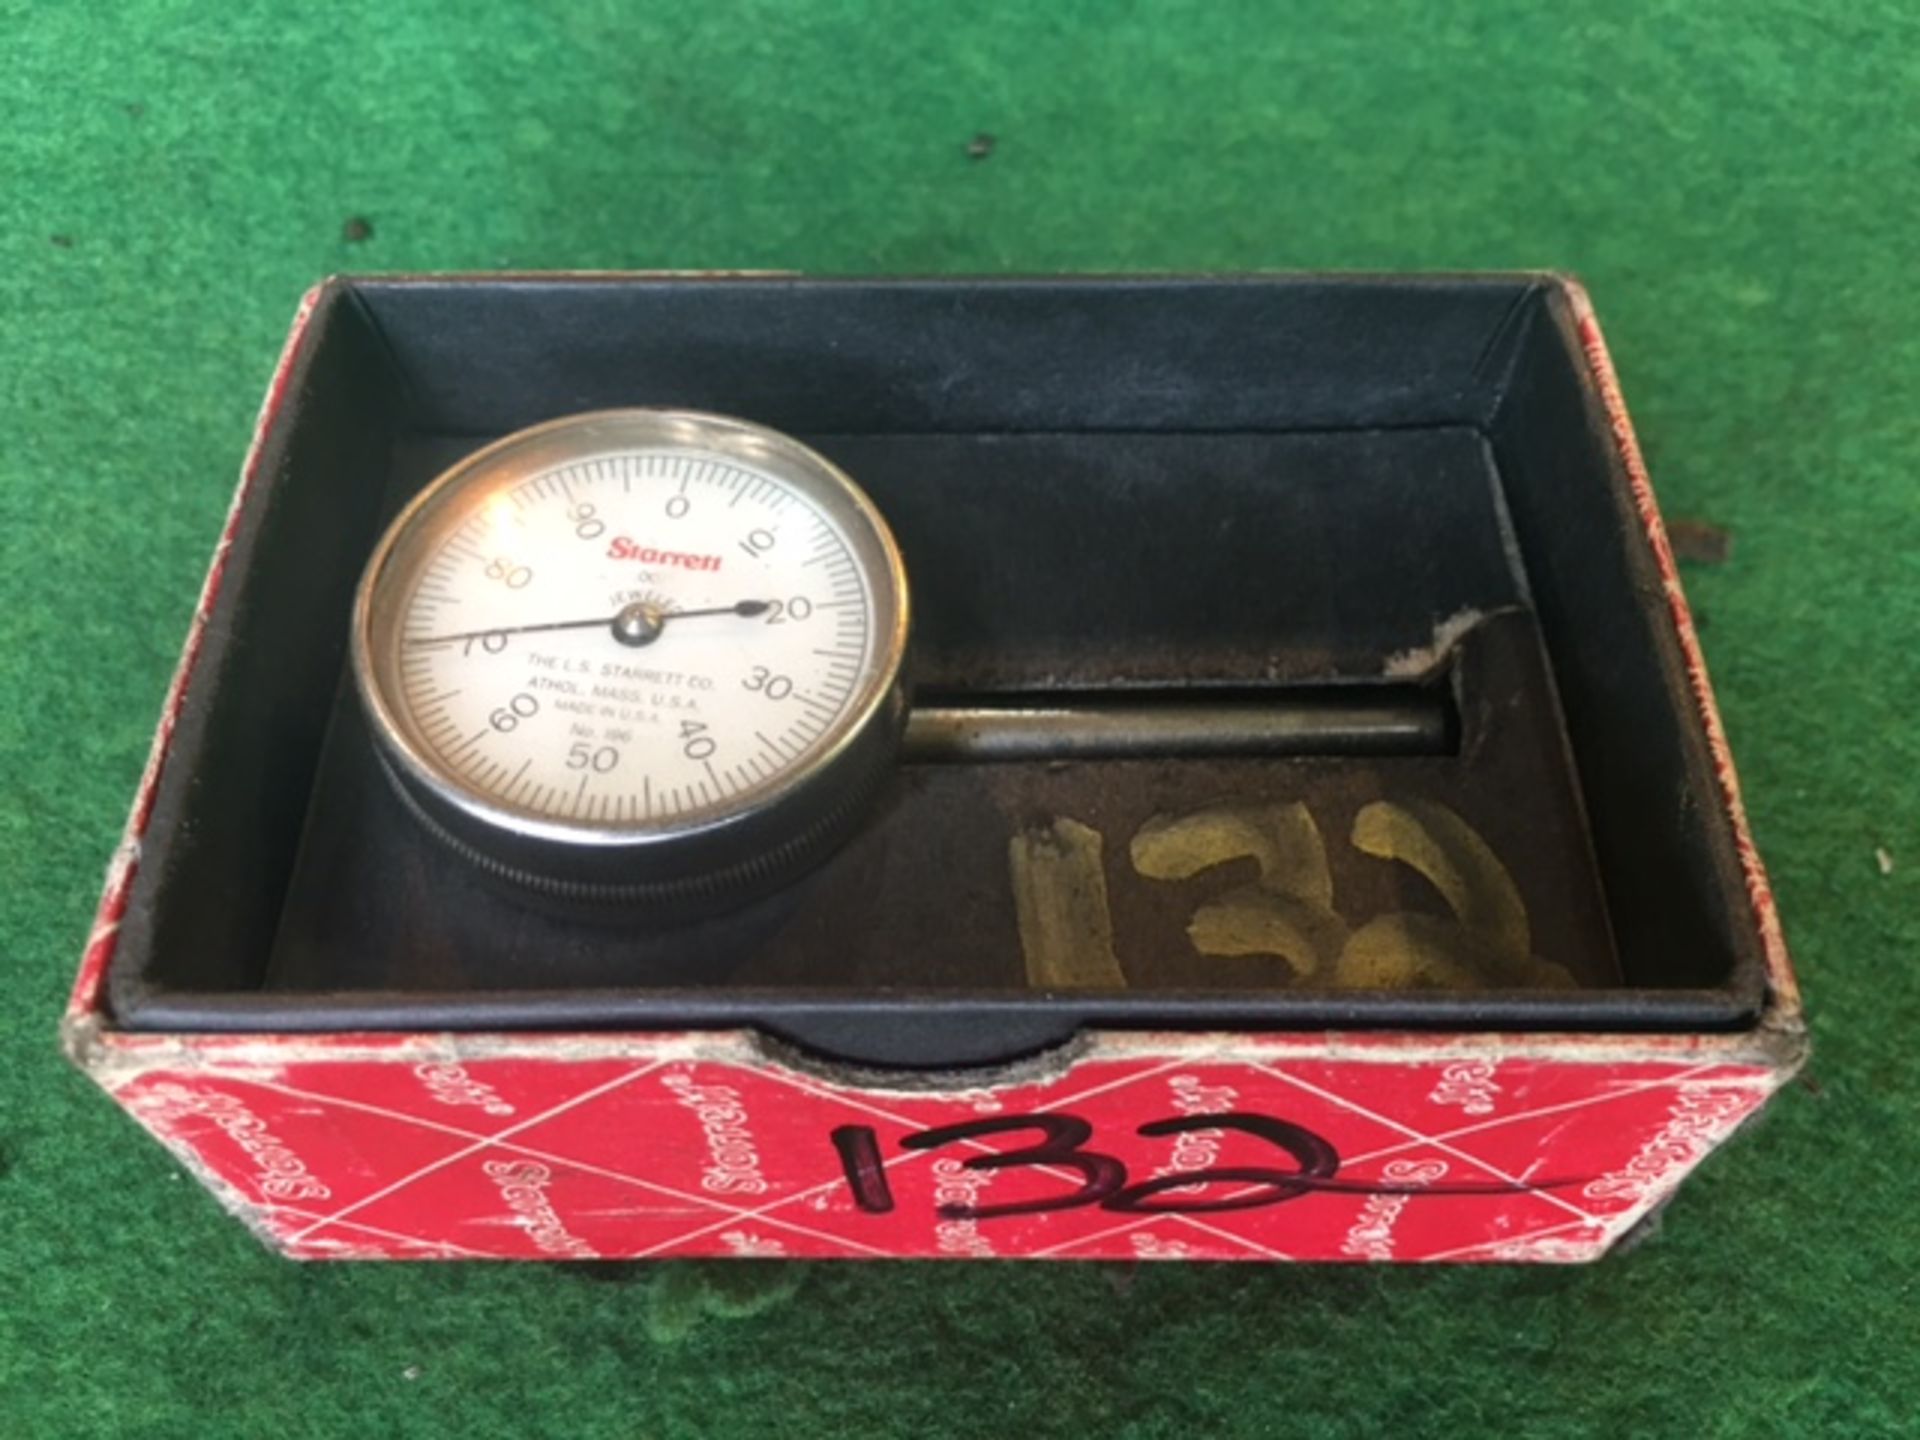 Starrett No. 196 dial indicator